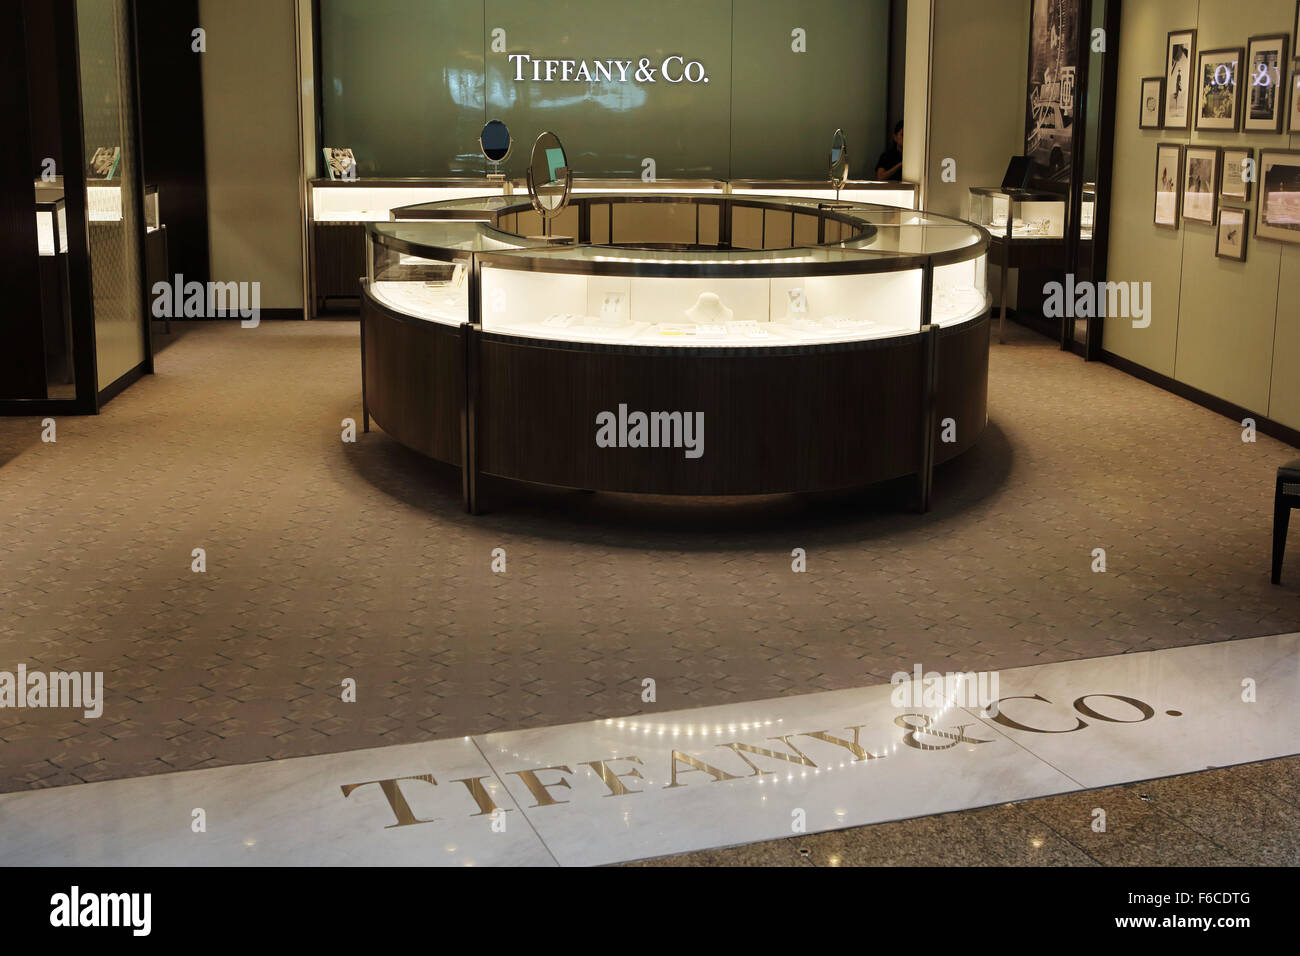 A Tiffany \u0026 Co jewellery store at 